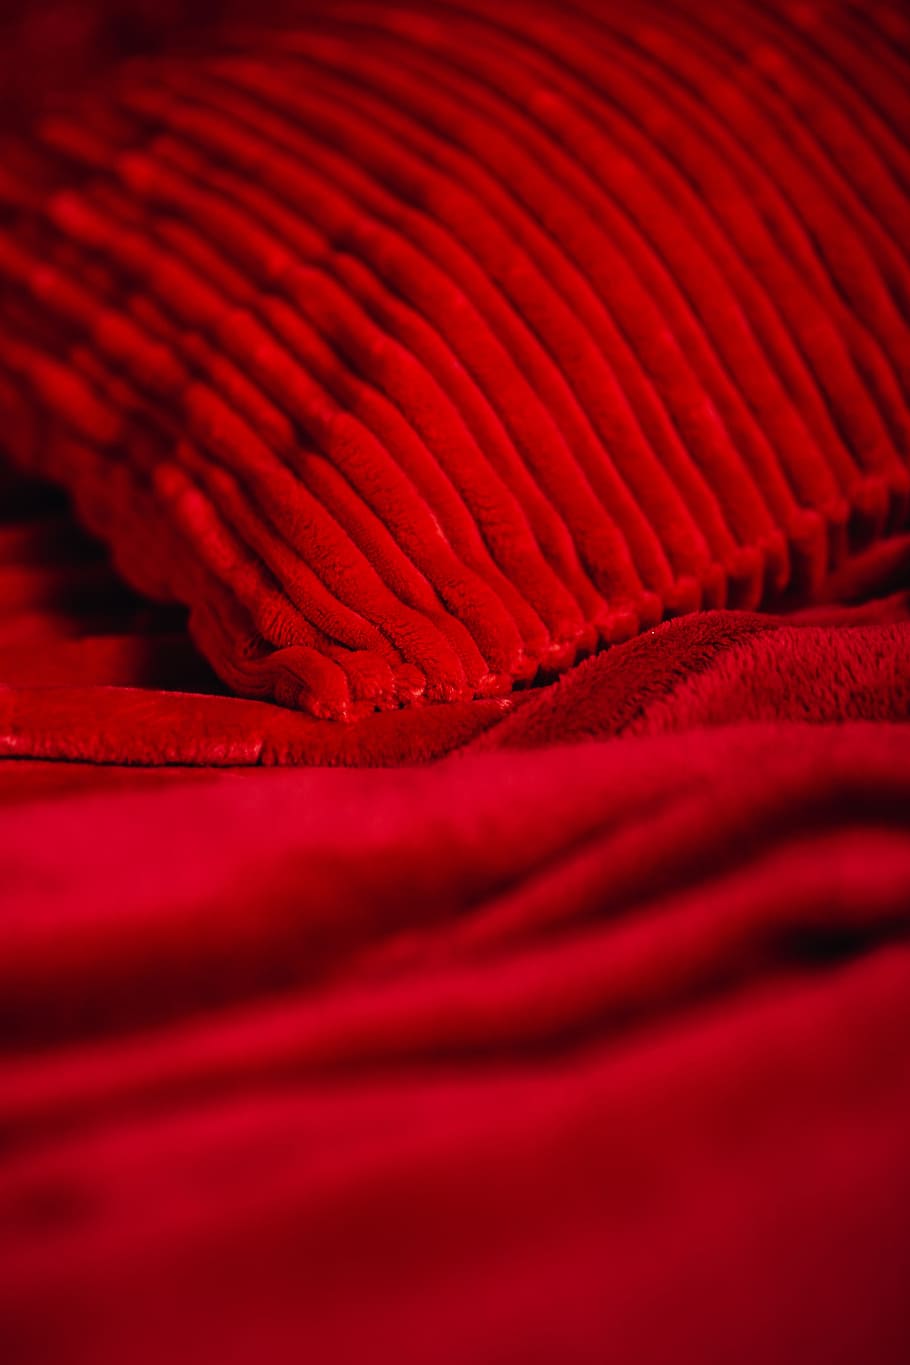 details, romantic, red, bedding, closeup, background, romance, pillows, texture, valentine